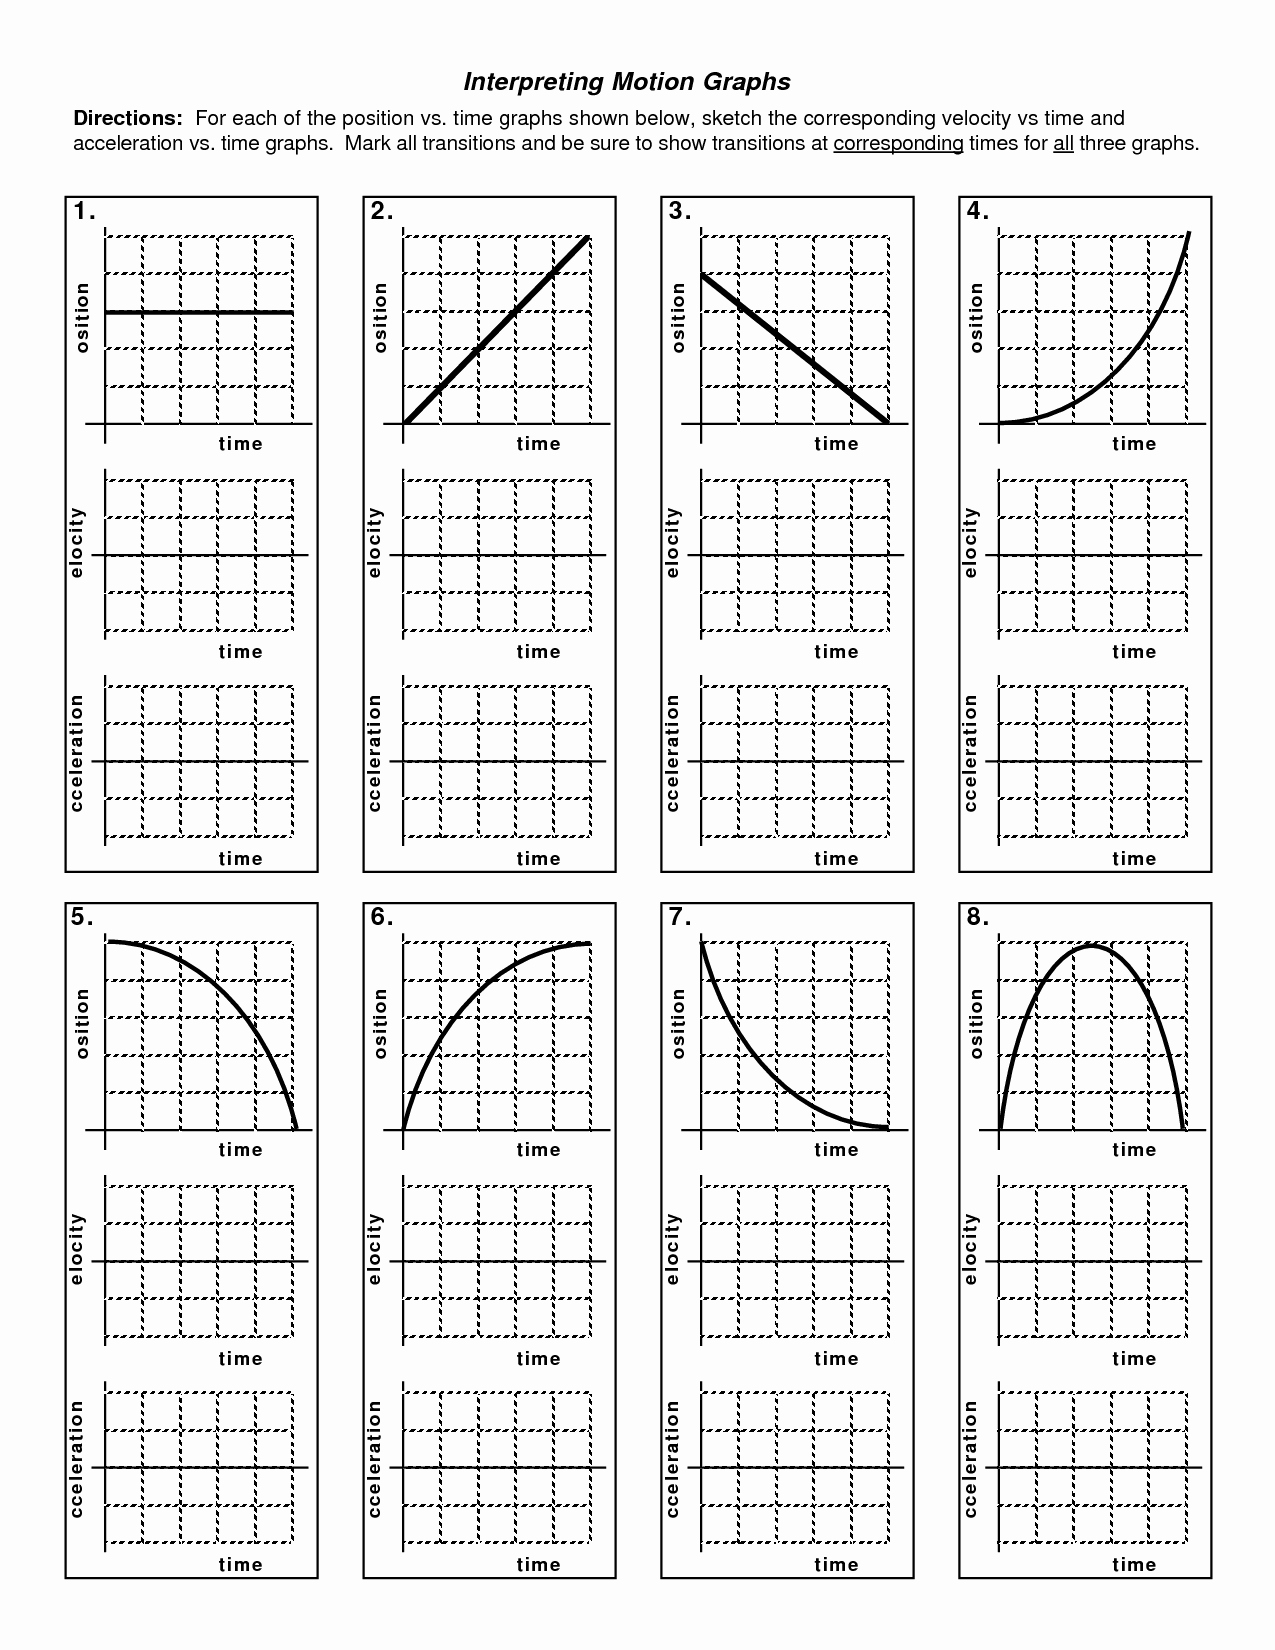 Motion Graphs Worksheet Answers Elegant Motion Graphs Kinematics Worksheet Answers